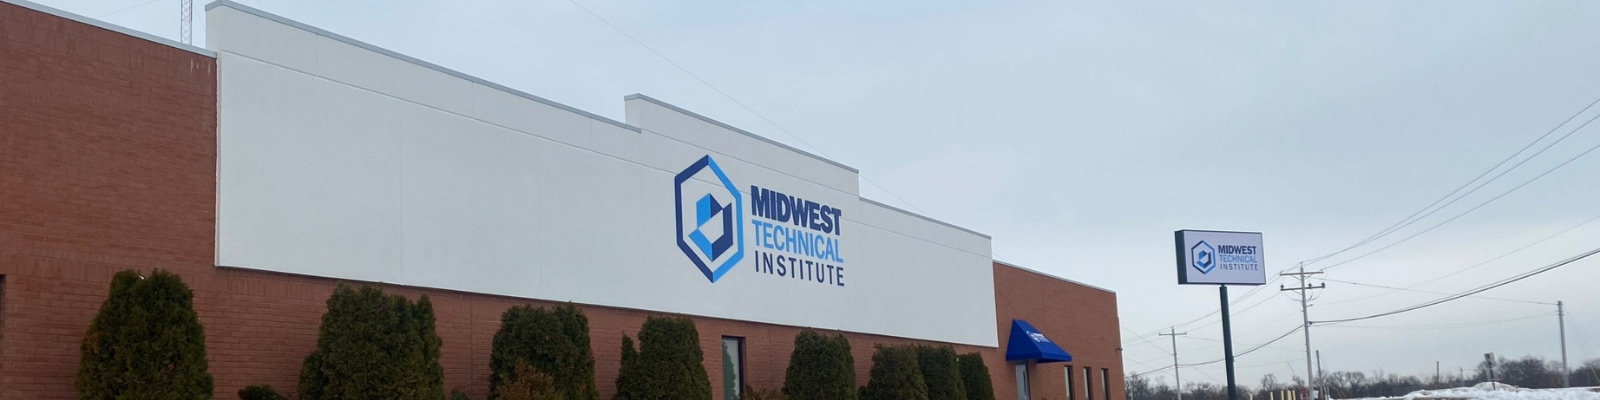 Midwest Technical Institute East Peoria, IL Campus